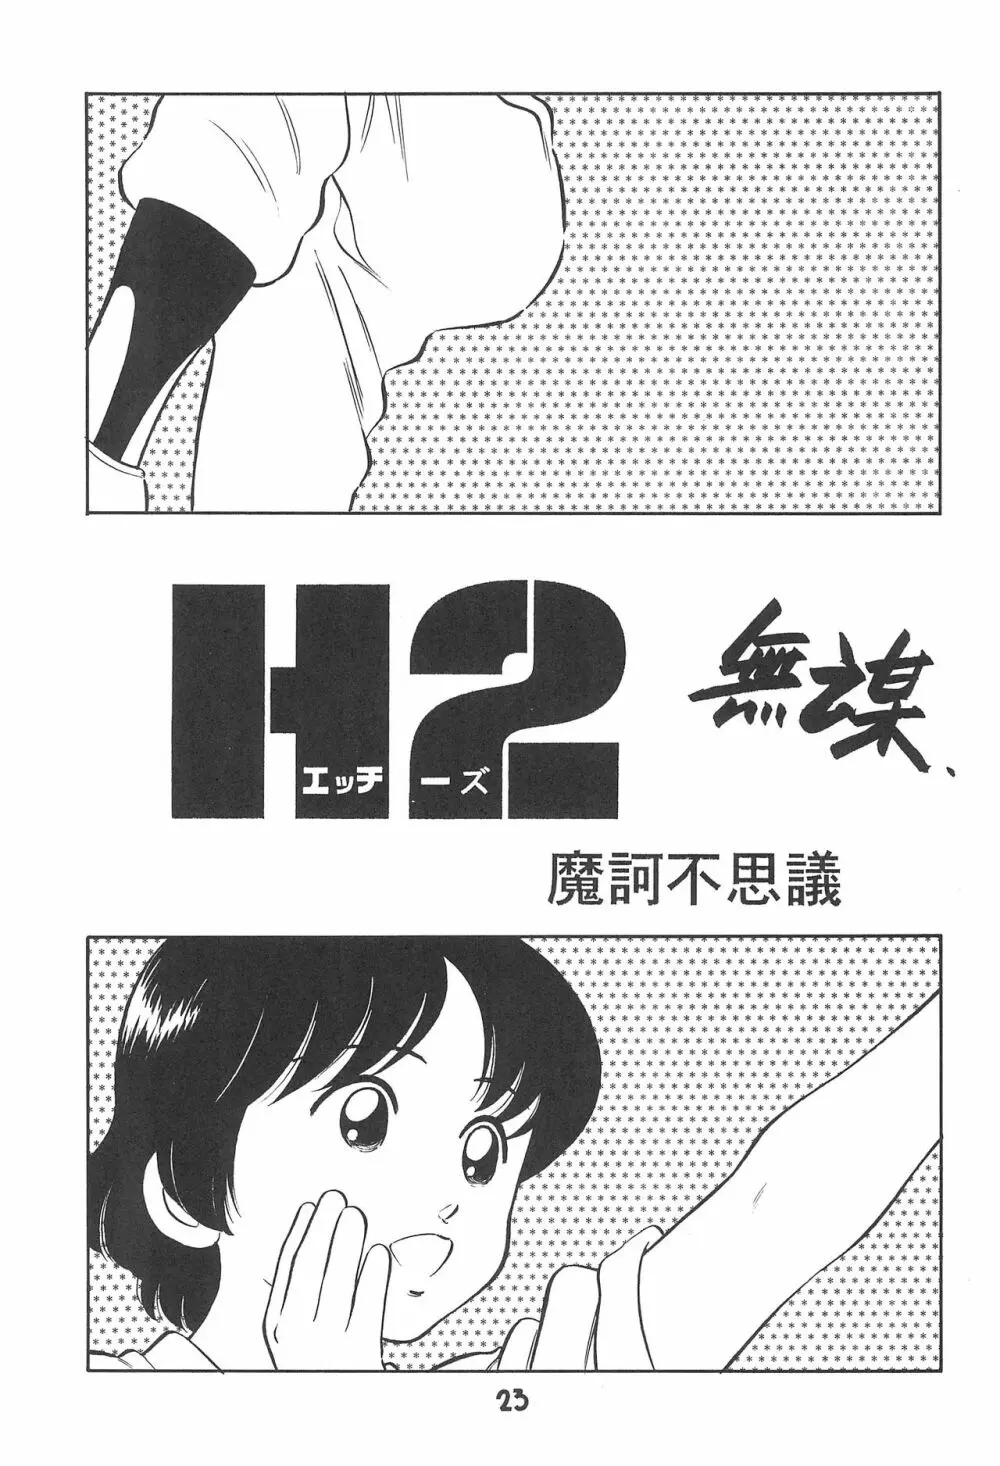 闘争心 - page22